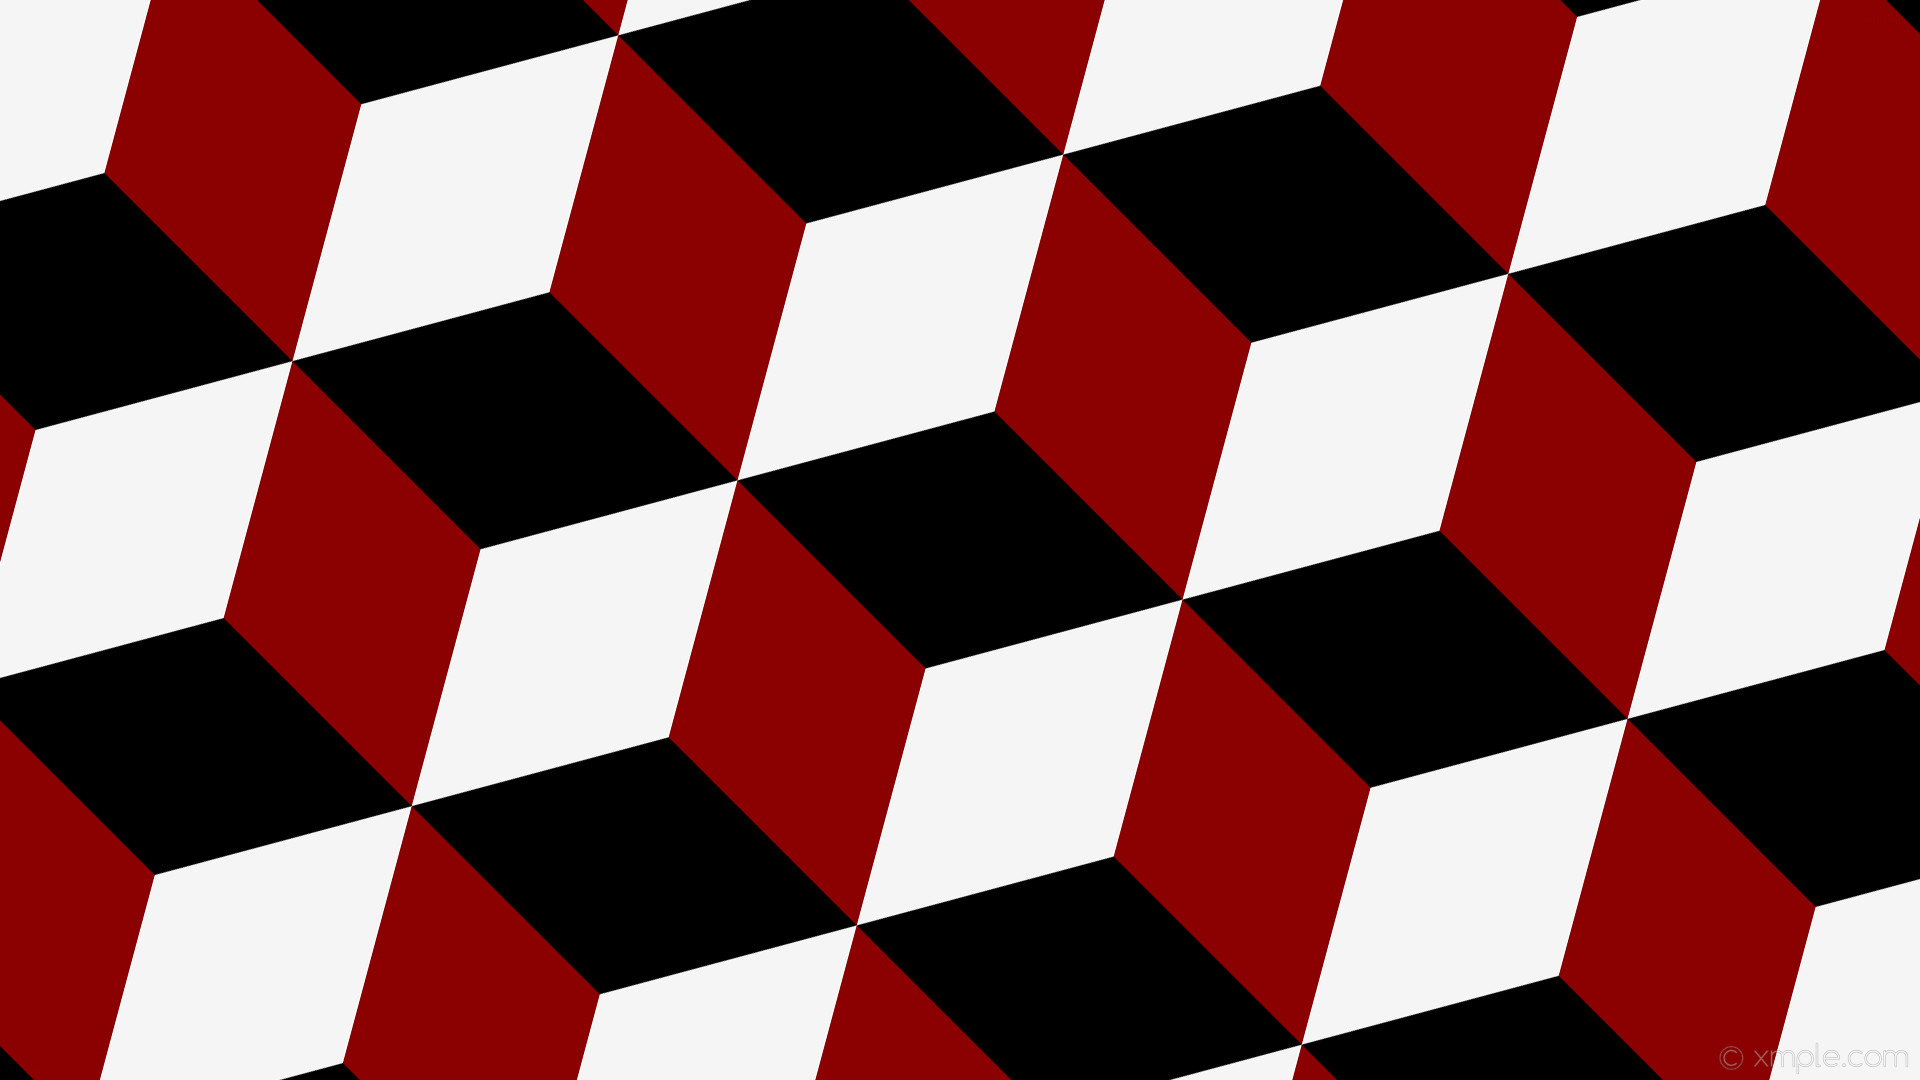 wallpaper red 3d cubes white black dark red white smoke #000000 #8b0000  #f5f5f5